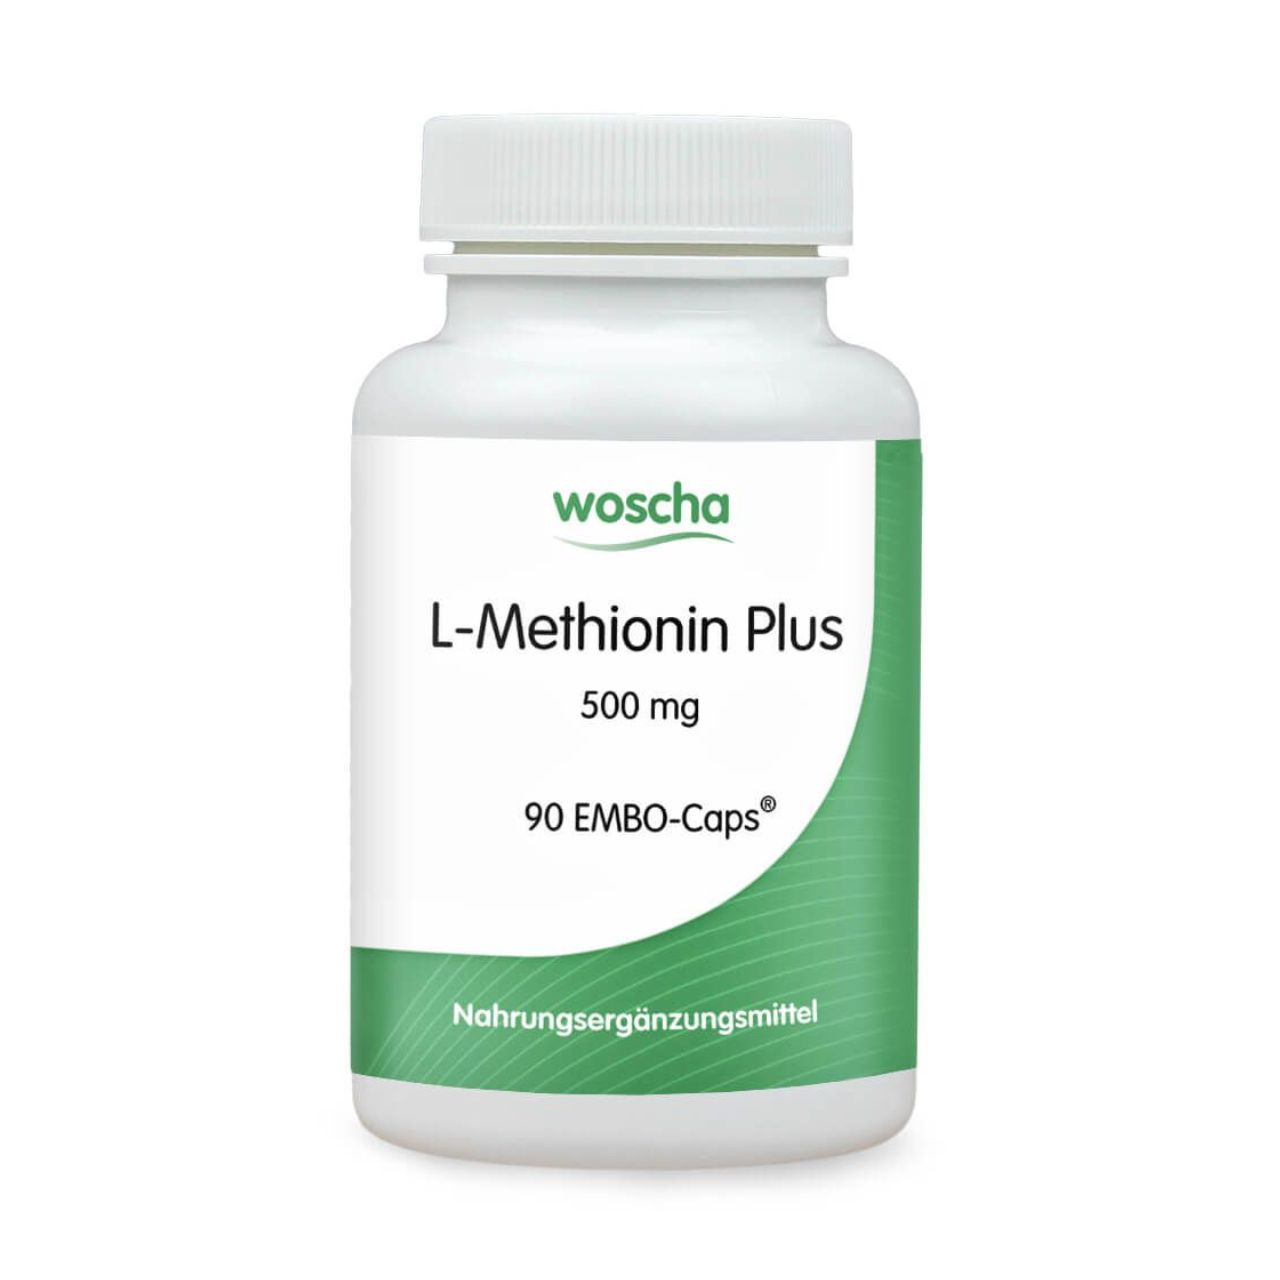 Woscha L-Methionin Plus P-5-P von podo medi beinhaltet 90 EMBO-CAPS